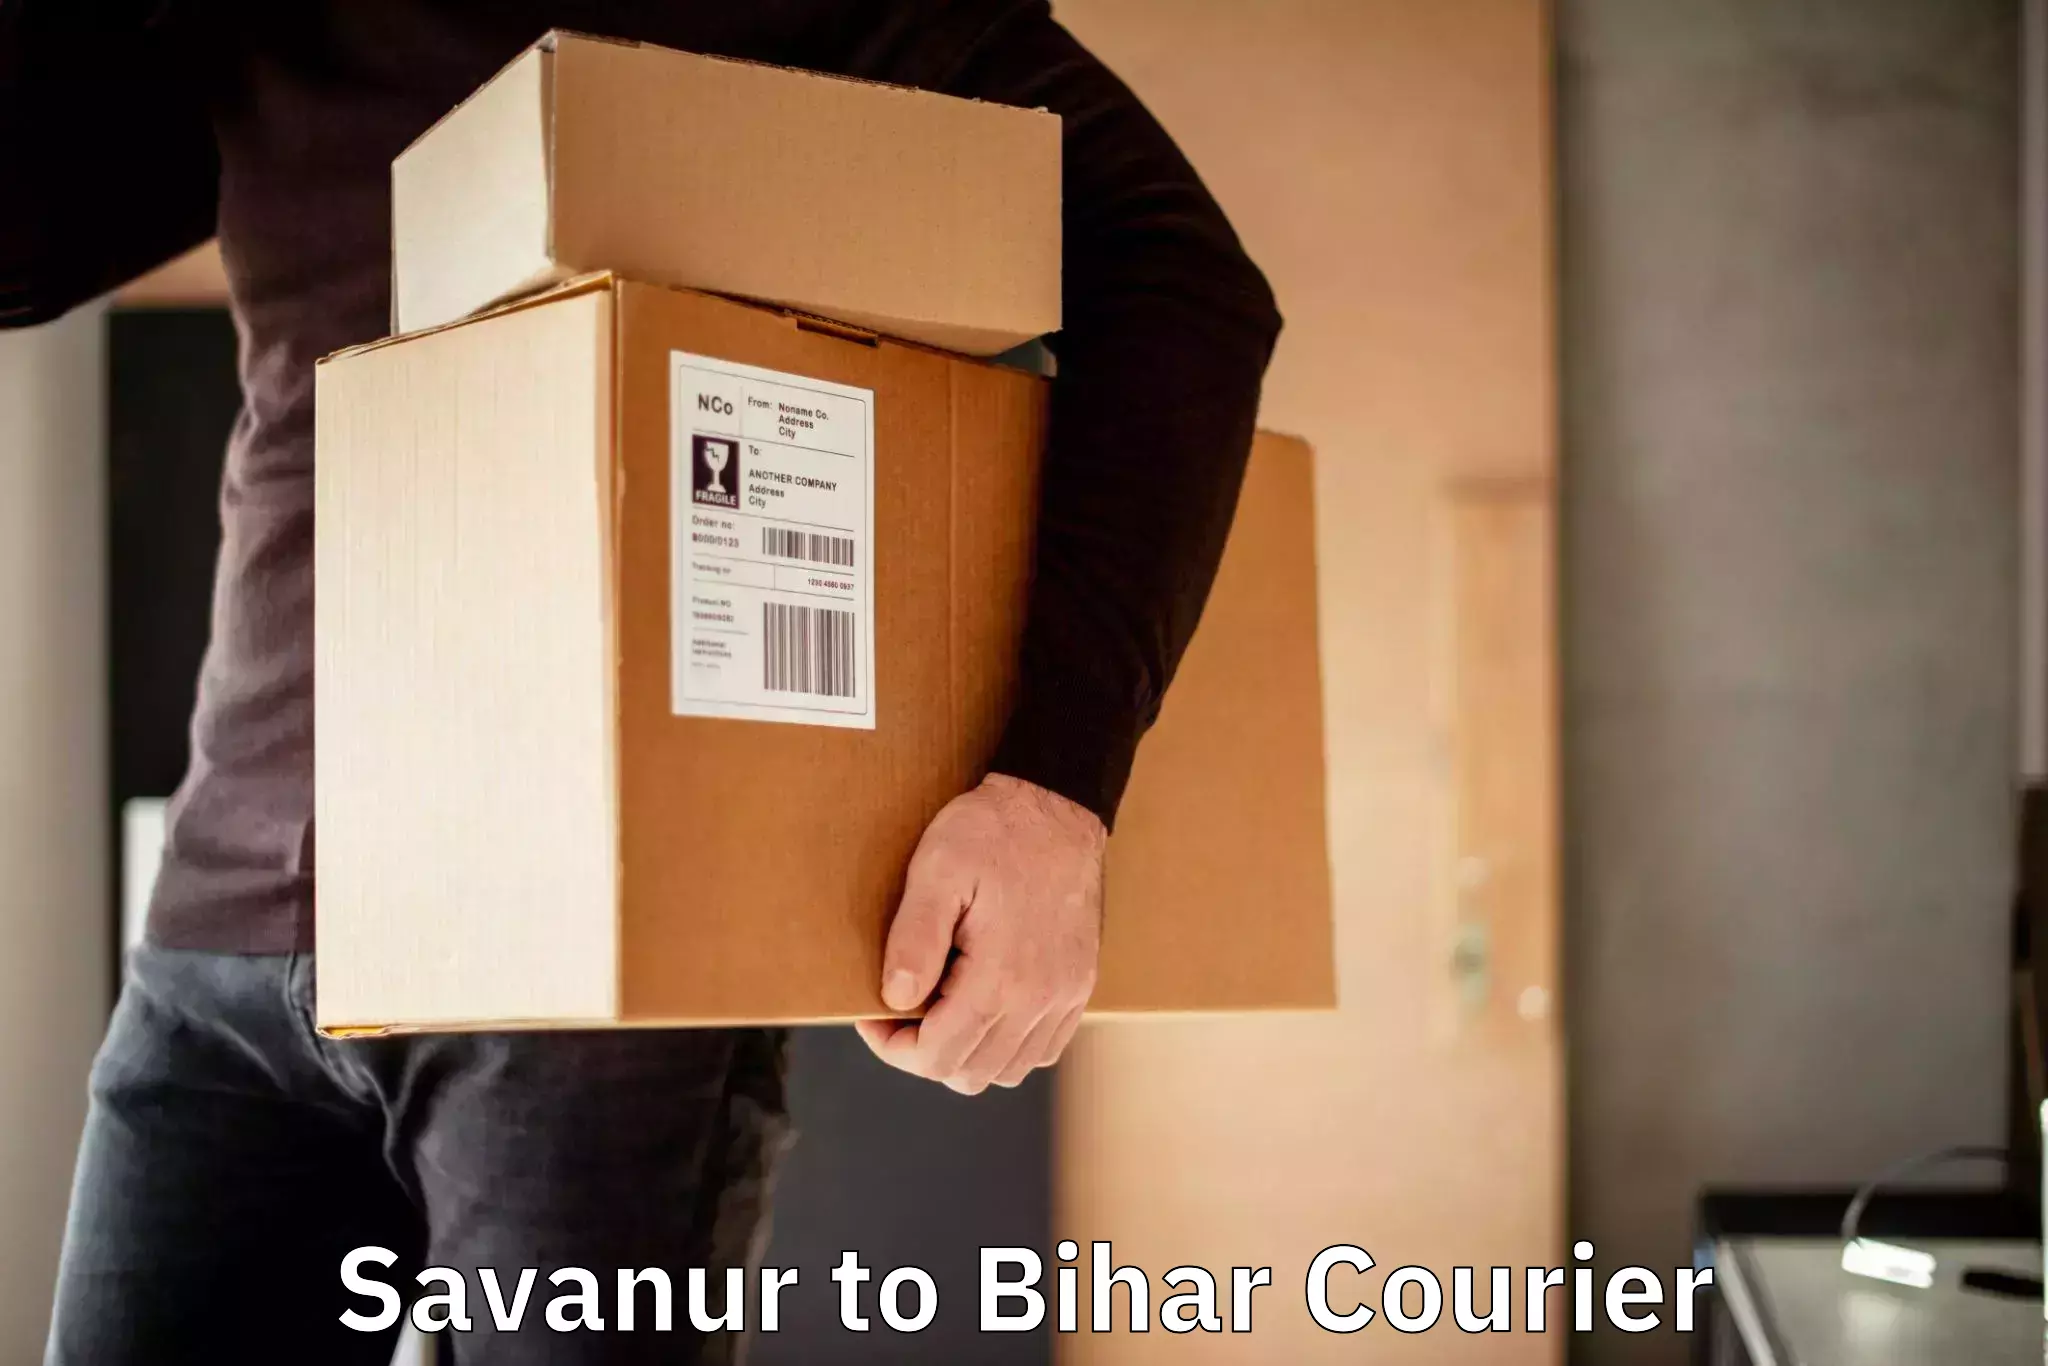 Customer-centric shipping Savanur to Piro